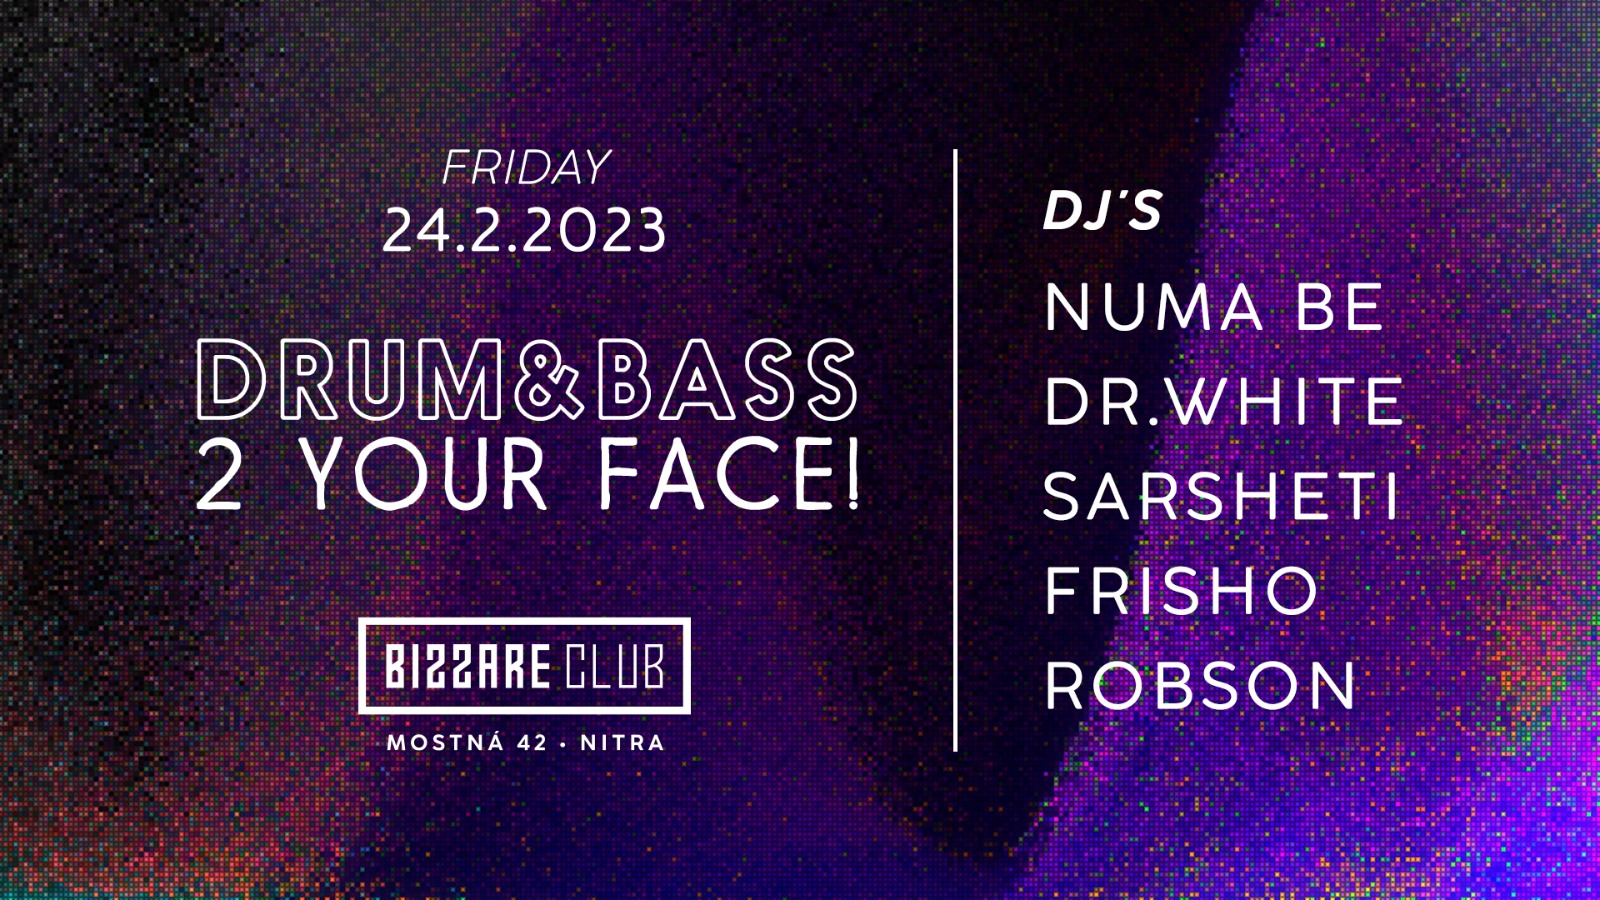 Drum&Bass 2 Your Face | 24 FEB Bizzare Club